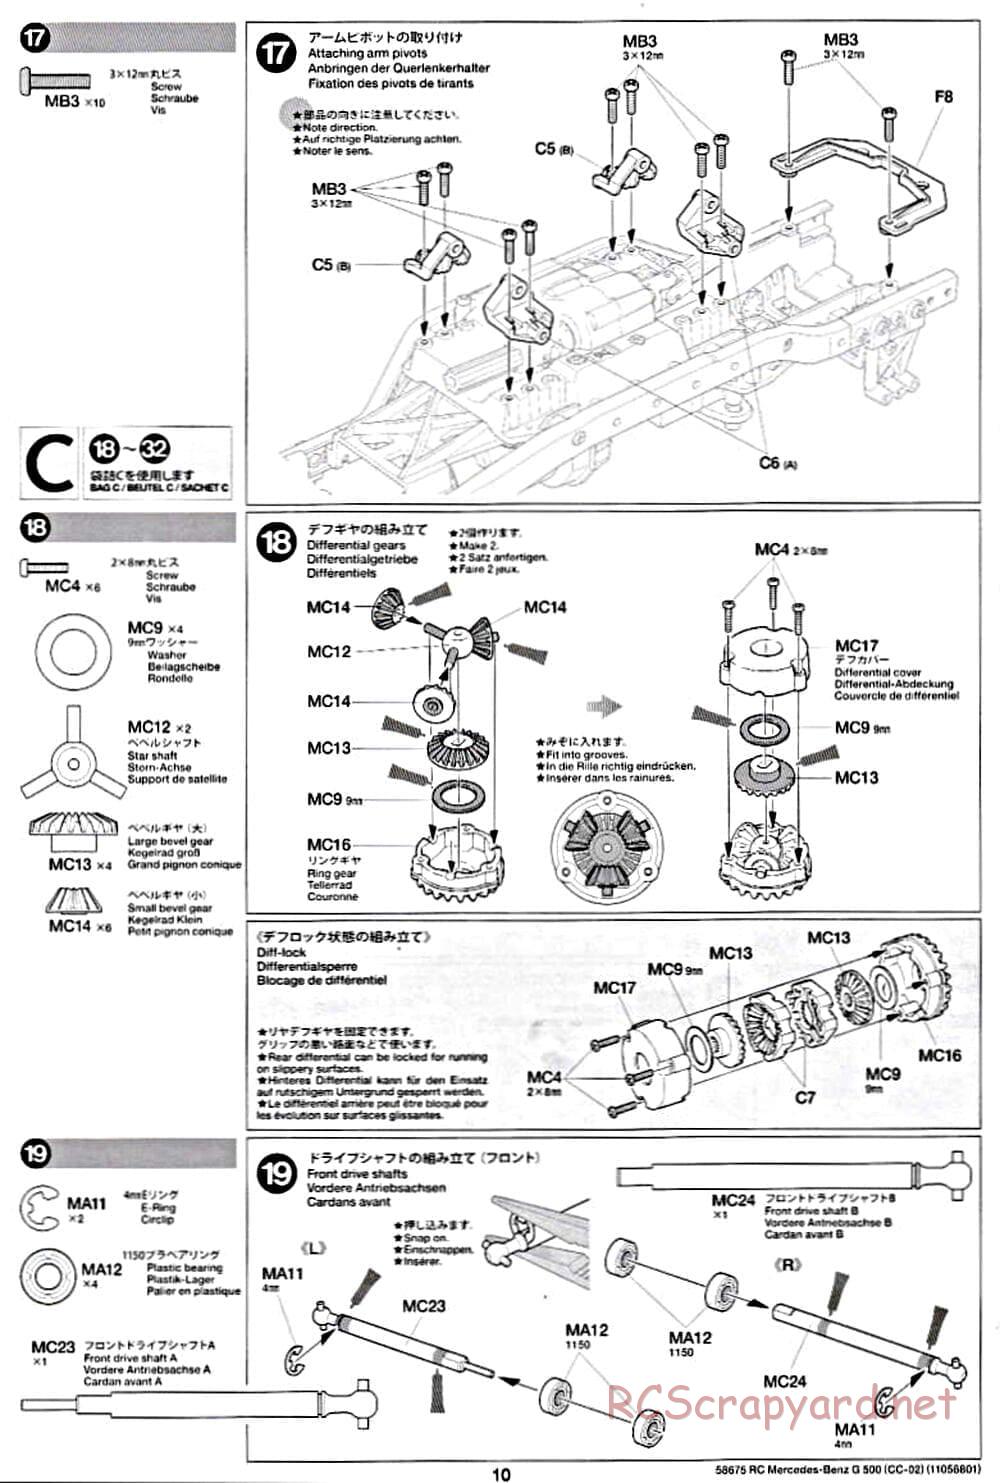 Tamiya - Mercedes-Benz G500 - CC-02 Chassis - Manual - Page 10